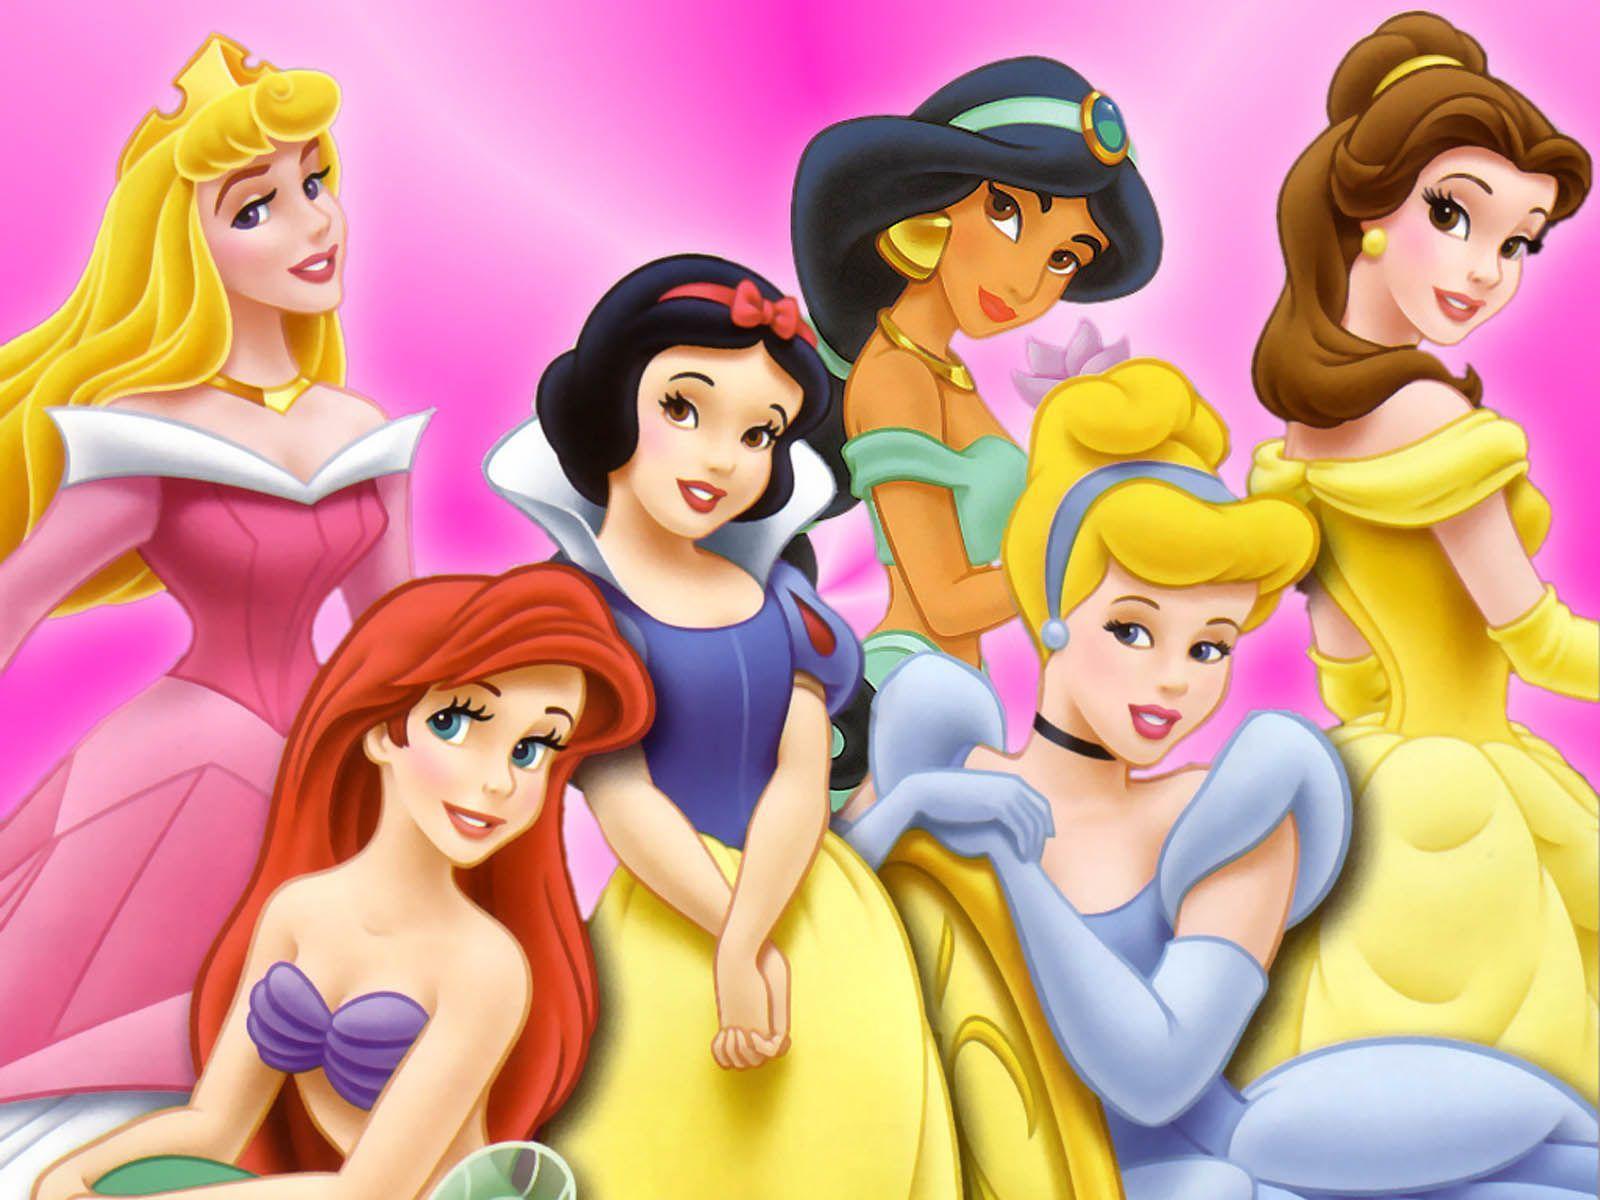 Disney Princess Wallpaper. Disney Princess Photo